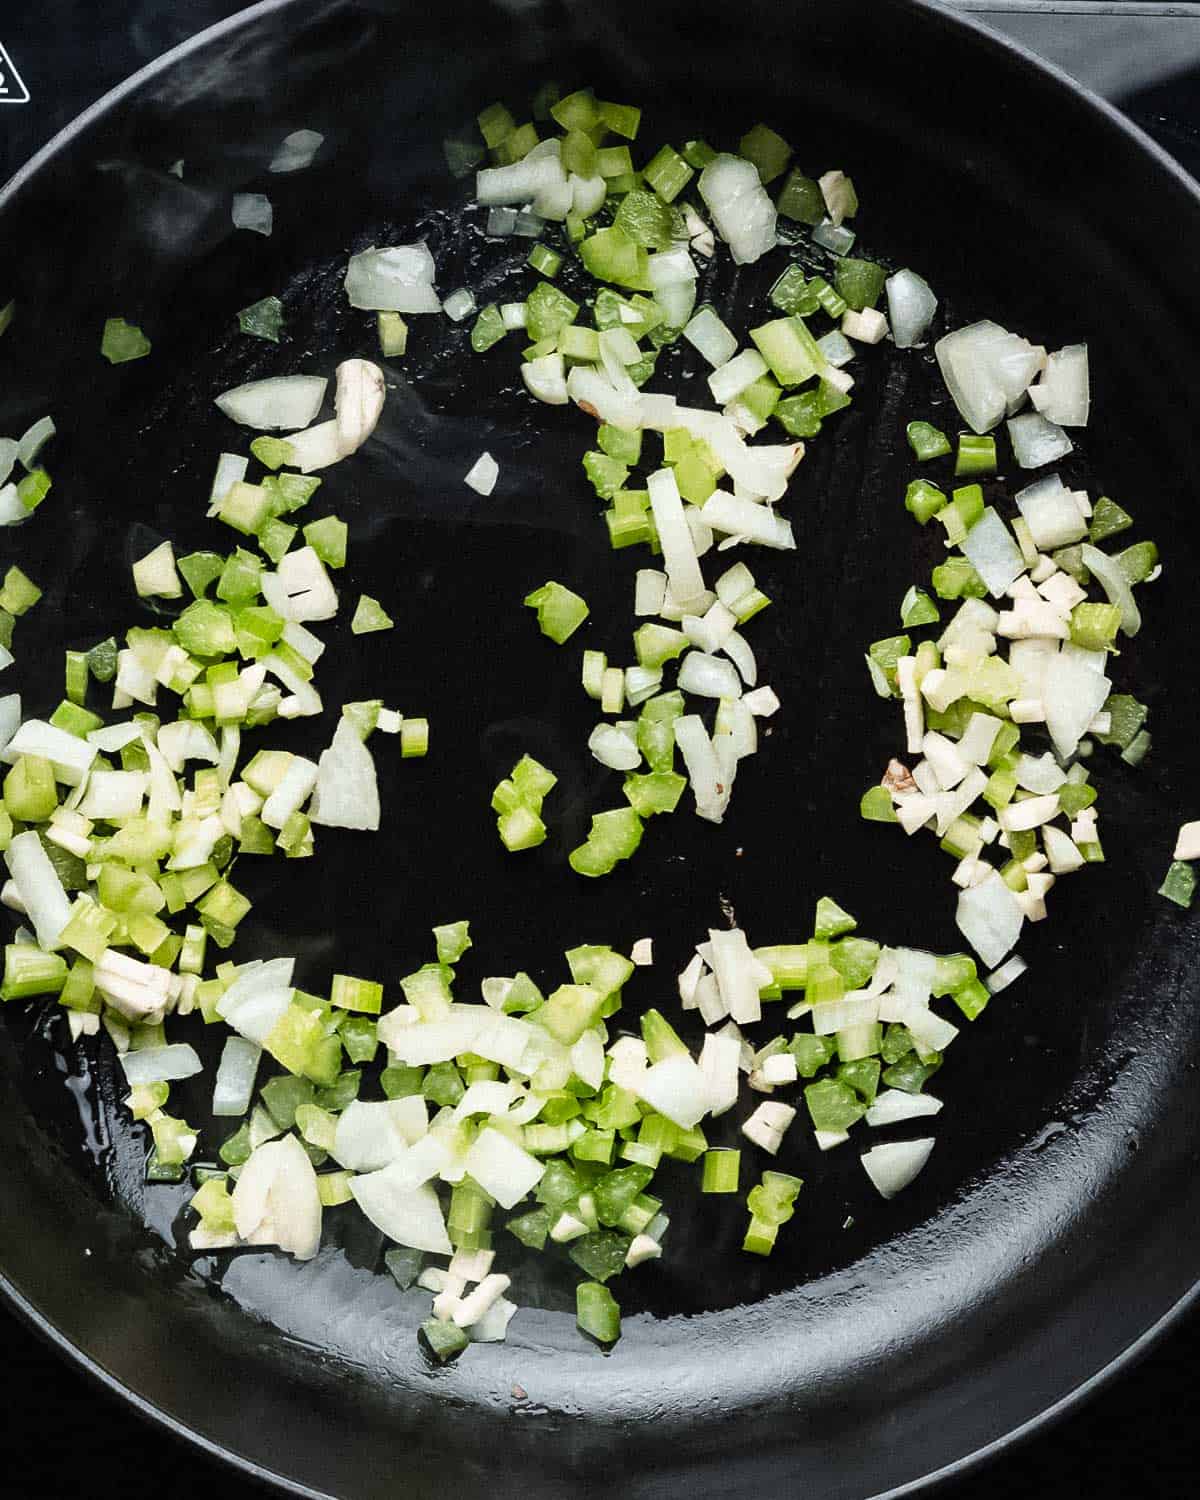 chopped onion, celery, garlic in a saucepan.